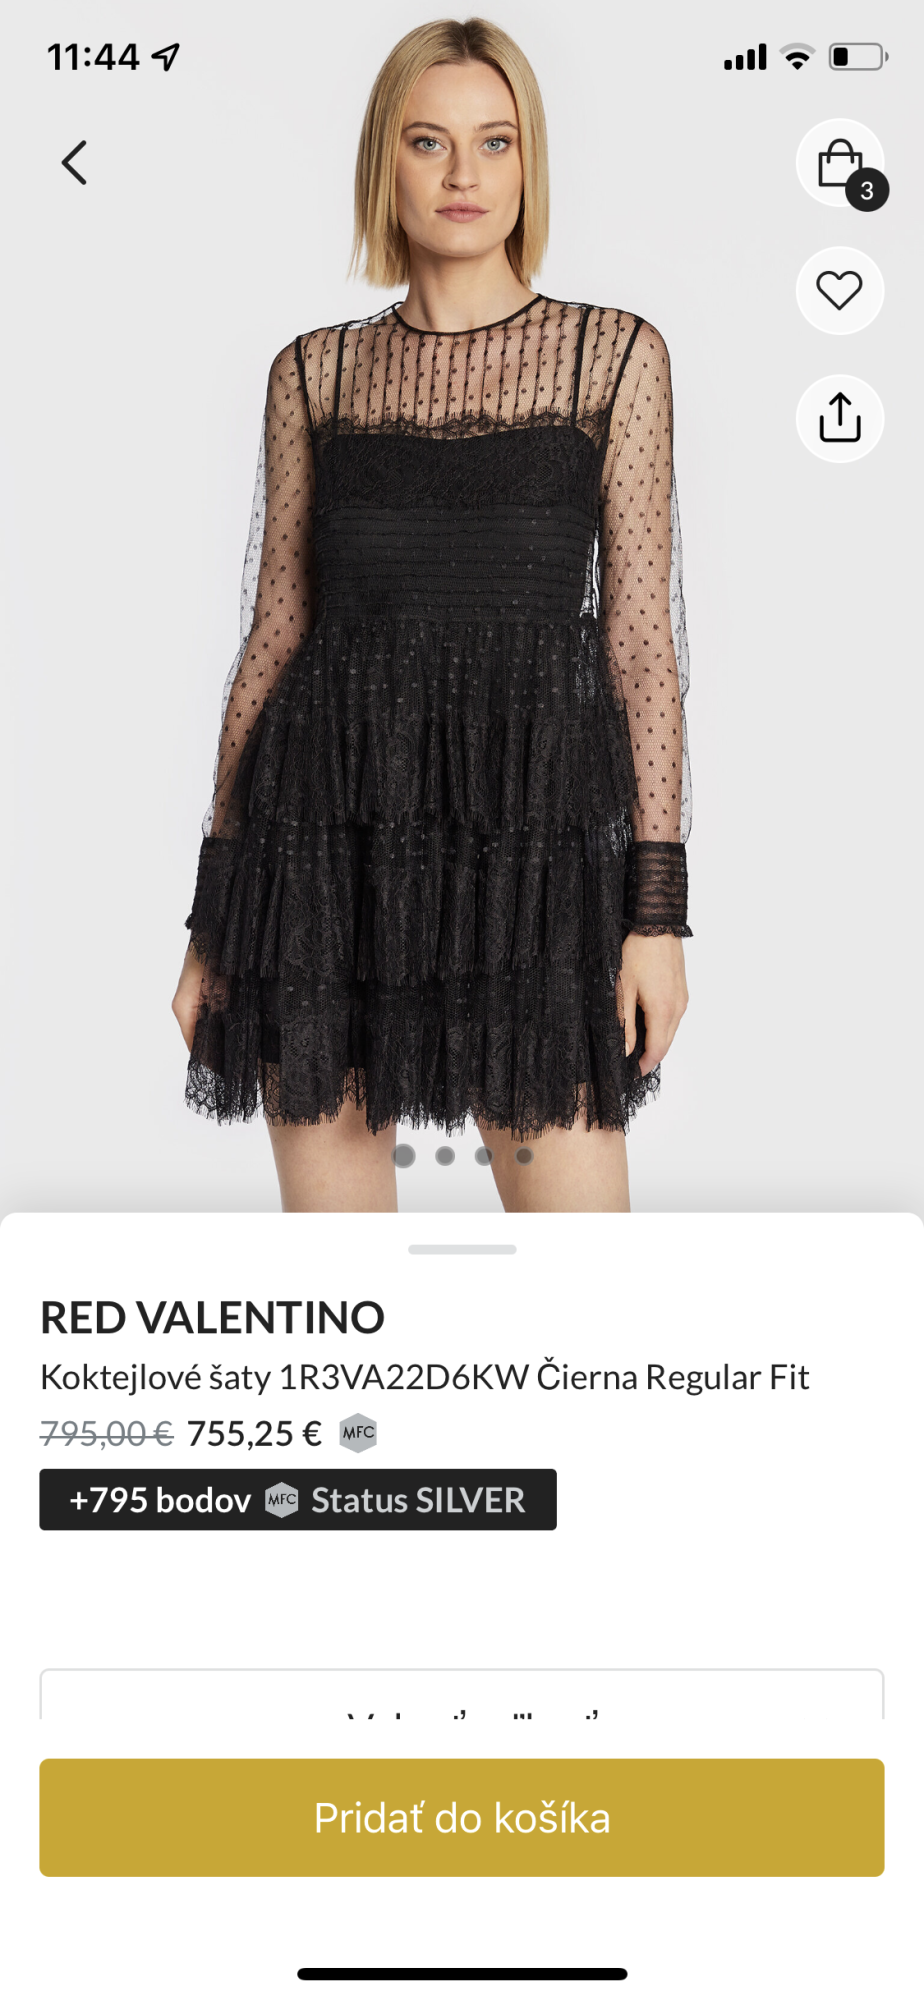 Red Valentino damske saty